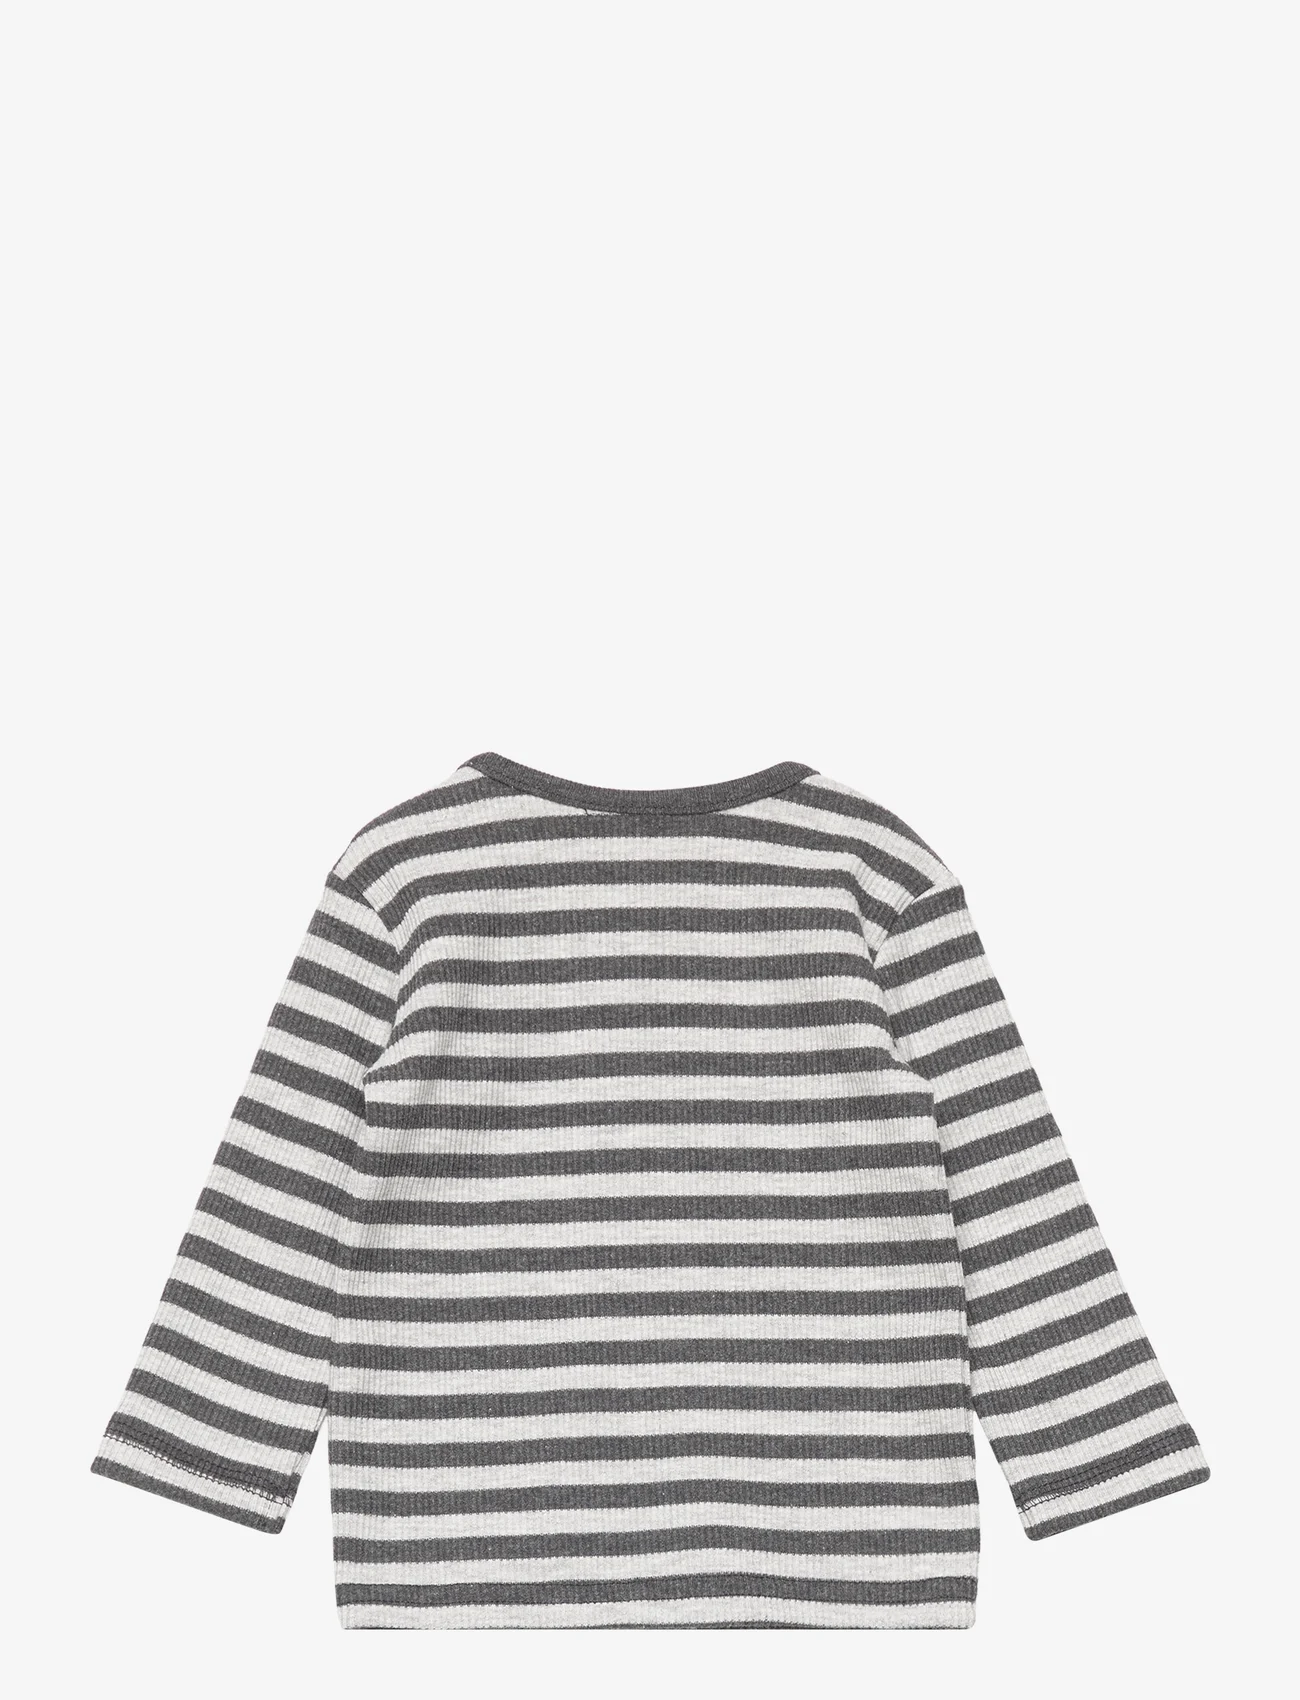 Noa Noa miniature - T-shirt - pitkähihaiset t-paidat - light/dark grey melange - 1